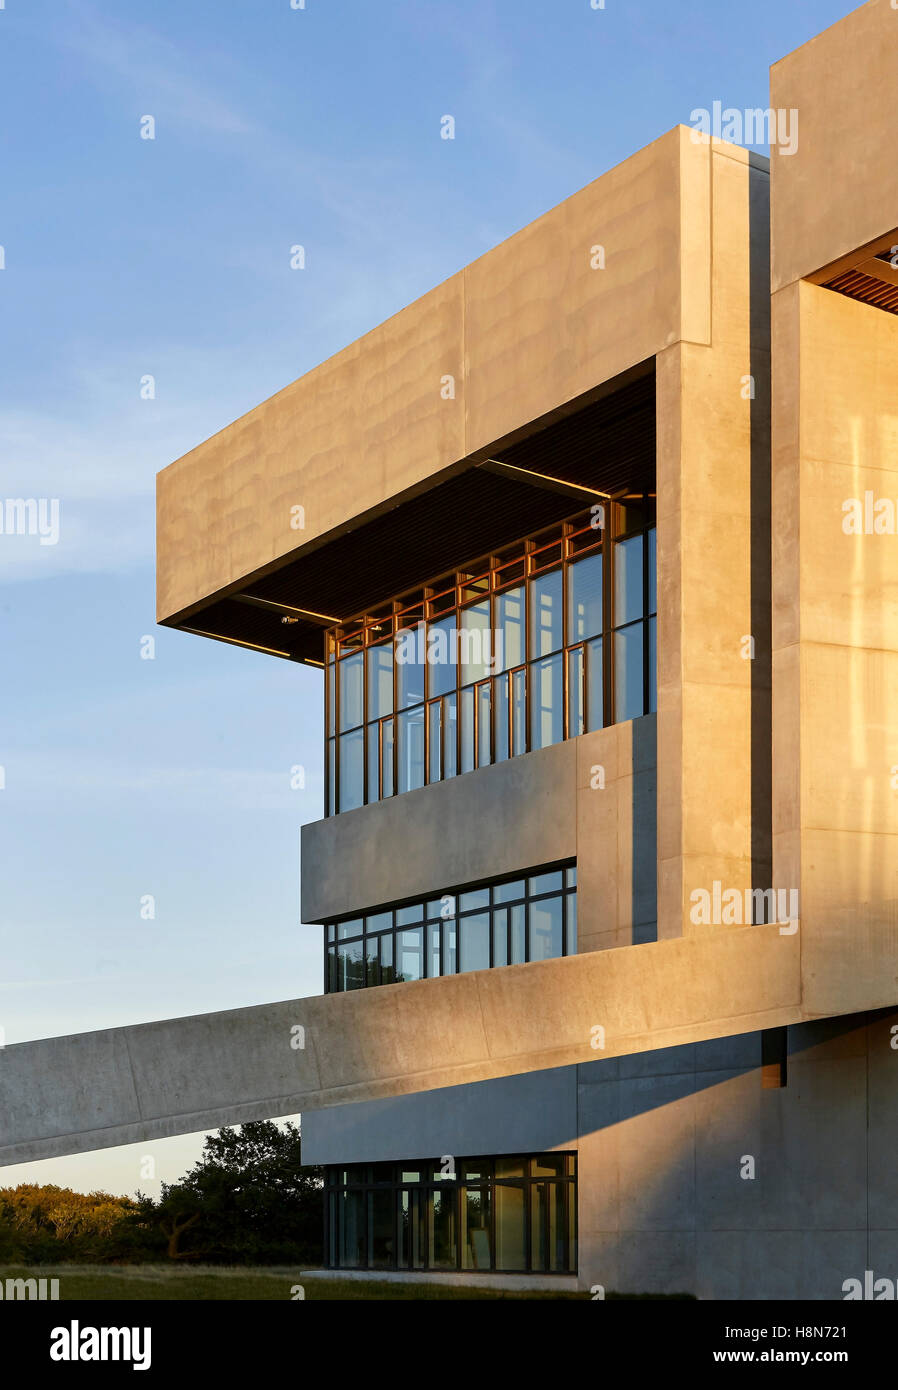 Profile of concrete facade and ramp. Moesgaard Museum, Aarhus, Denmark. Architect: Henning Larsen, 2015. Stock Photo